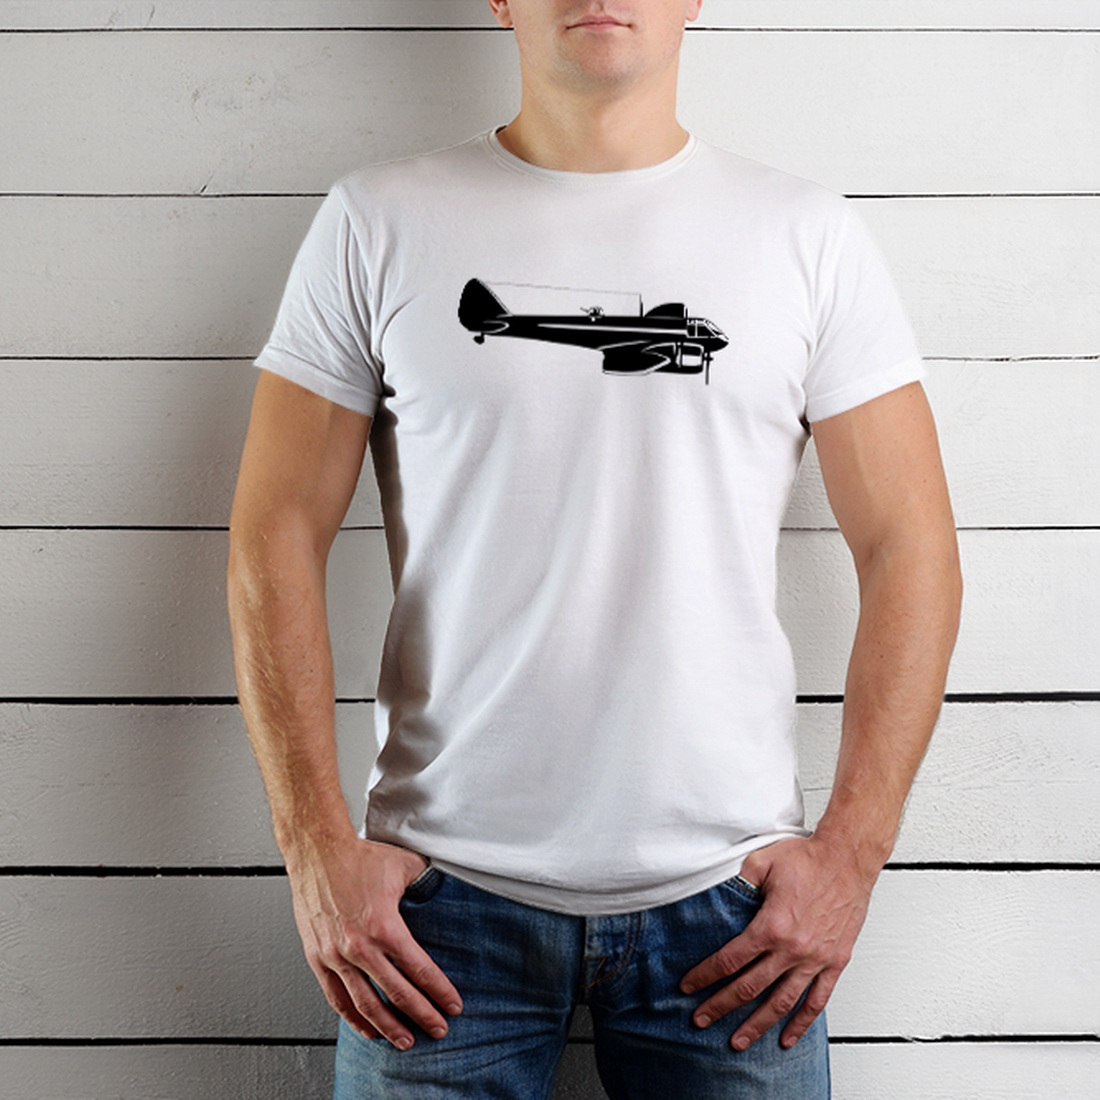 Black airplane on a white t-shirt.